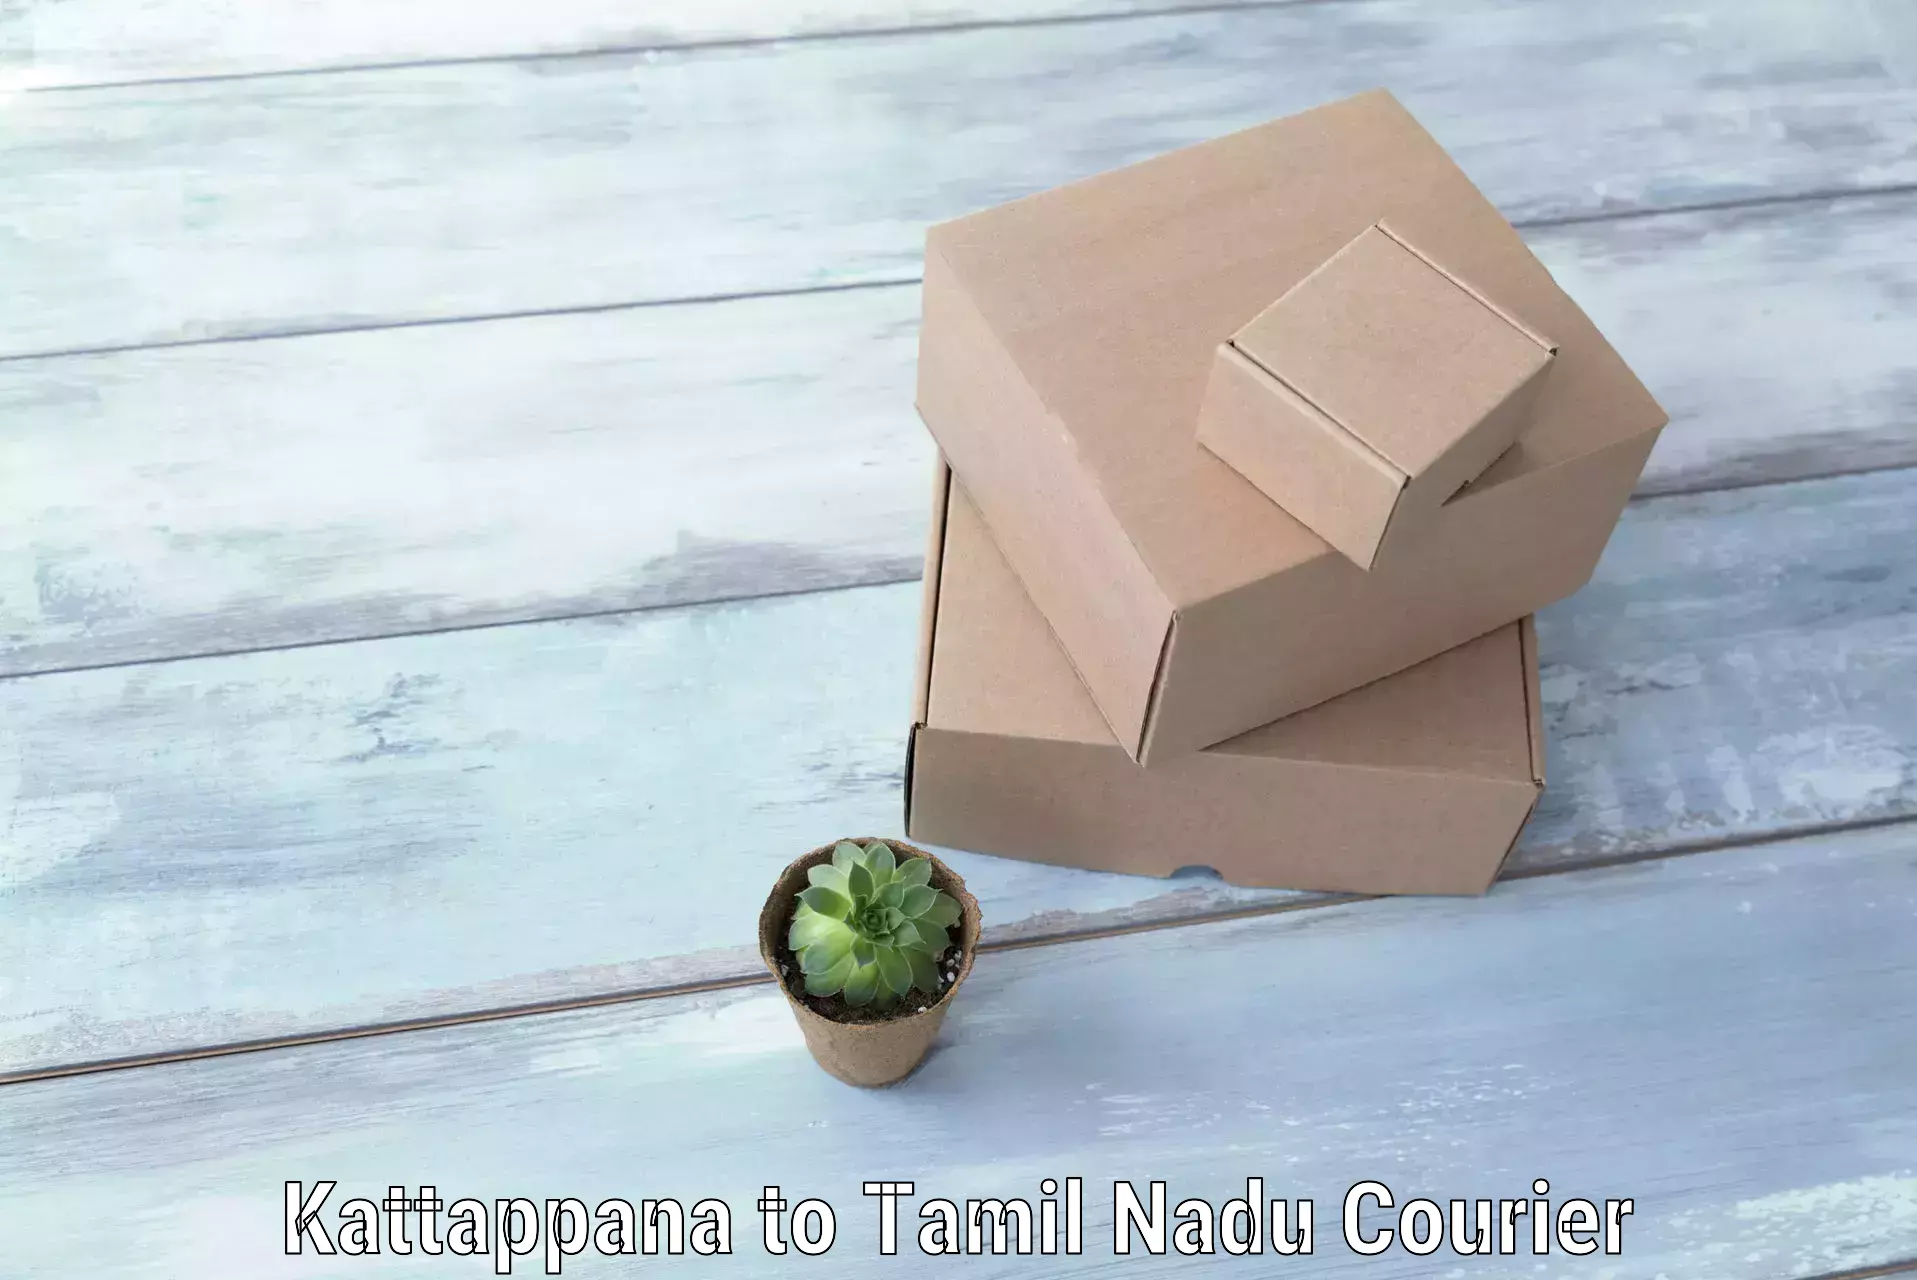 Personal effects shipping in Kattappana to Eraiyur